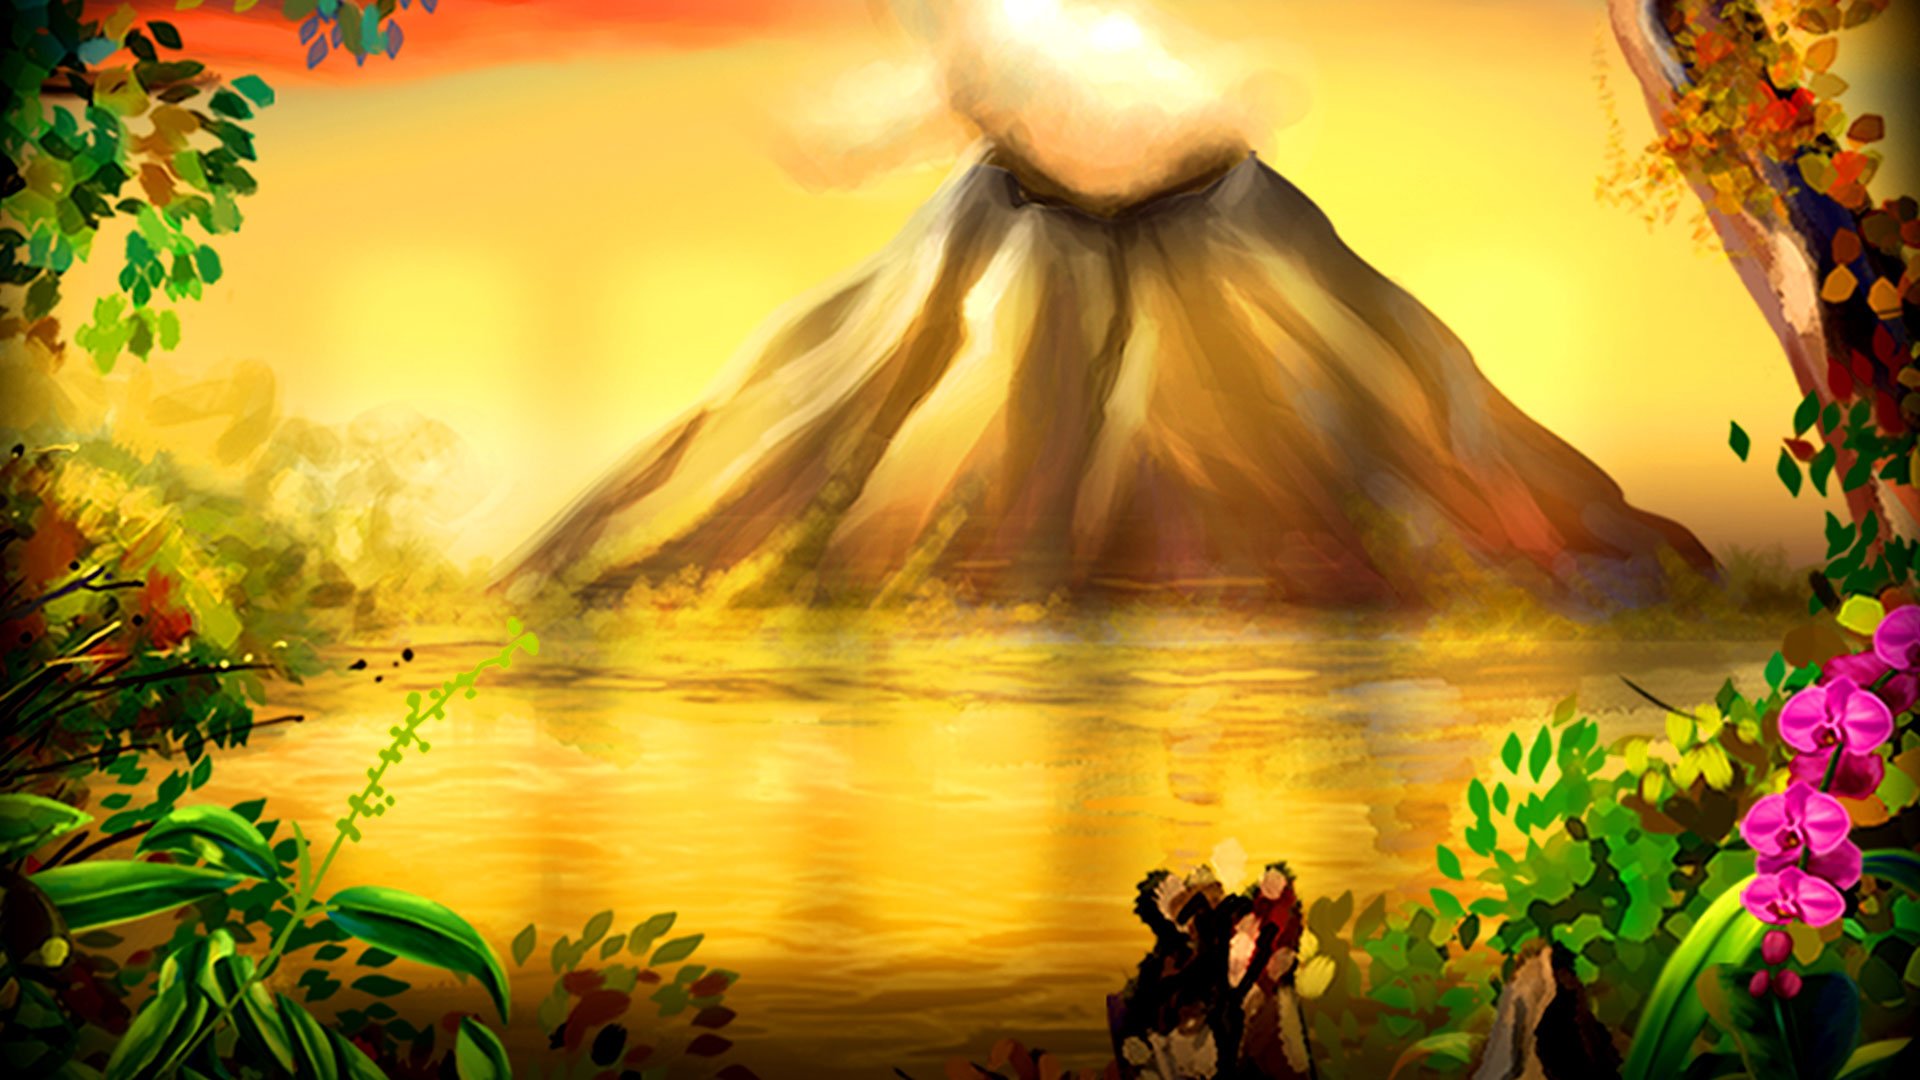 Game hight resolution background Volcano Eruption